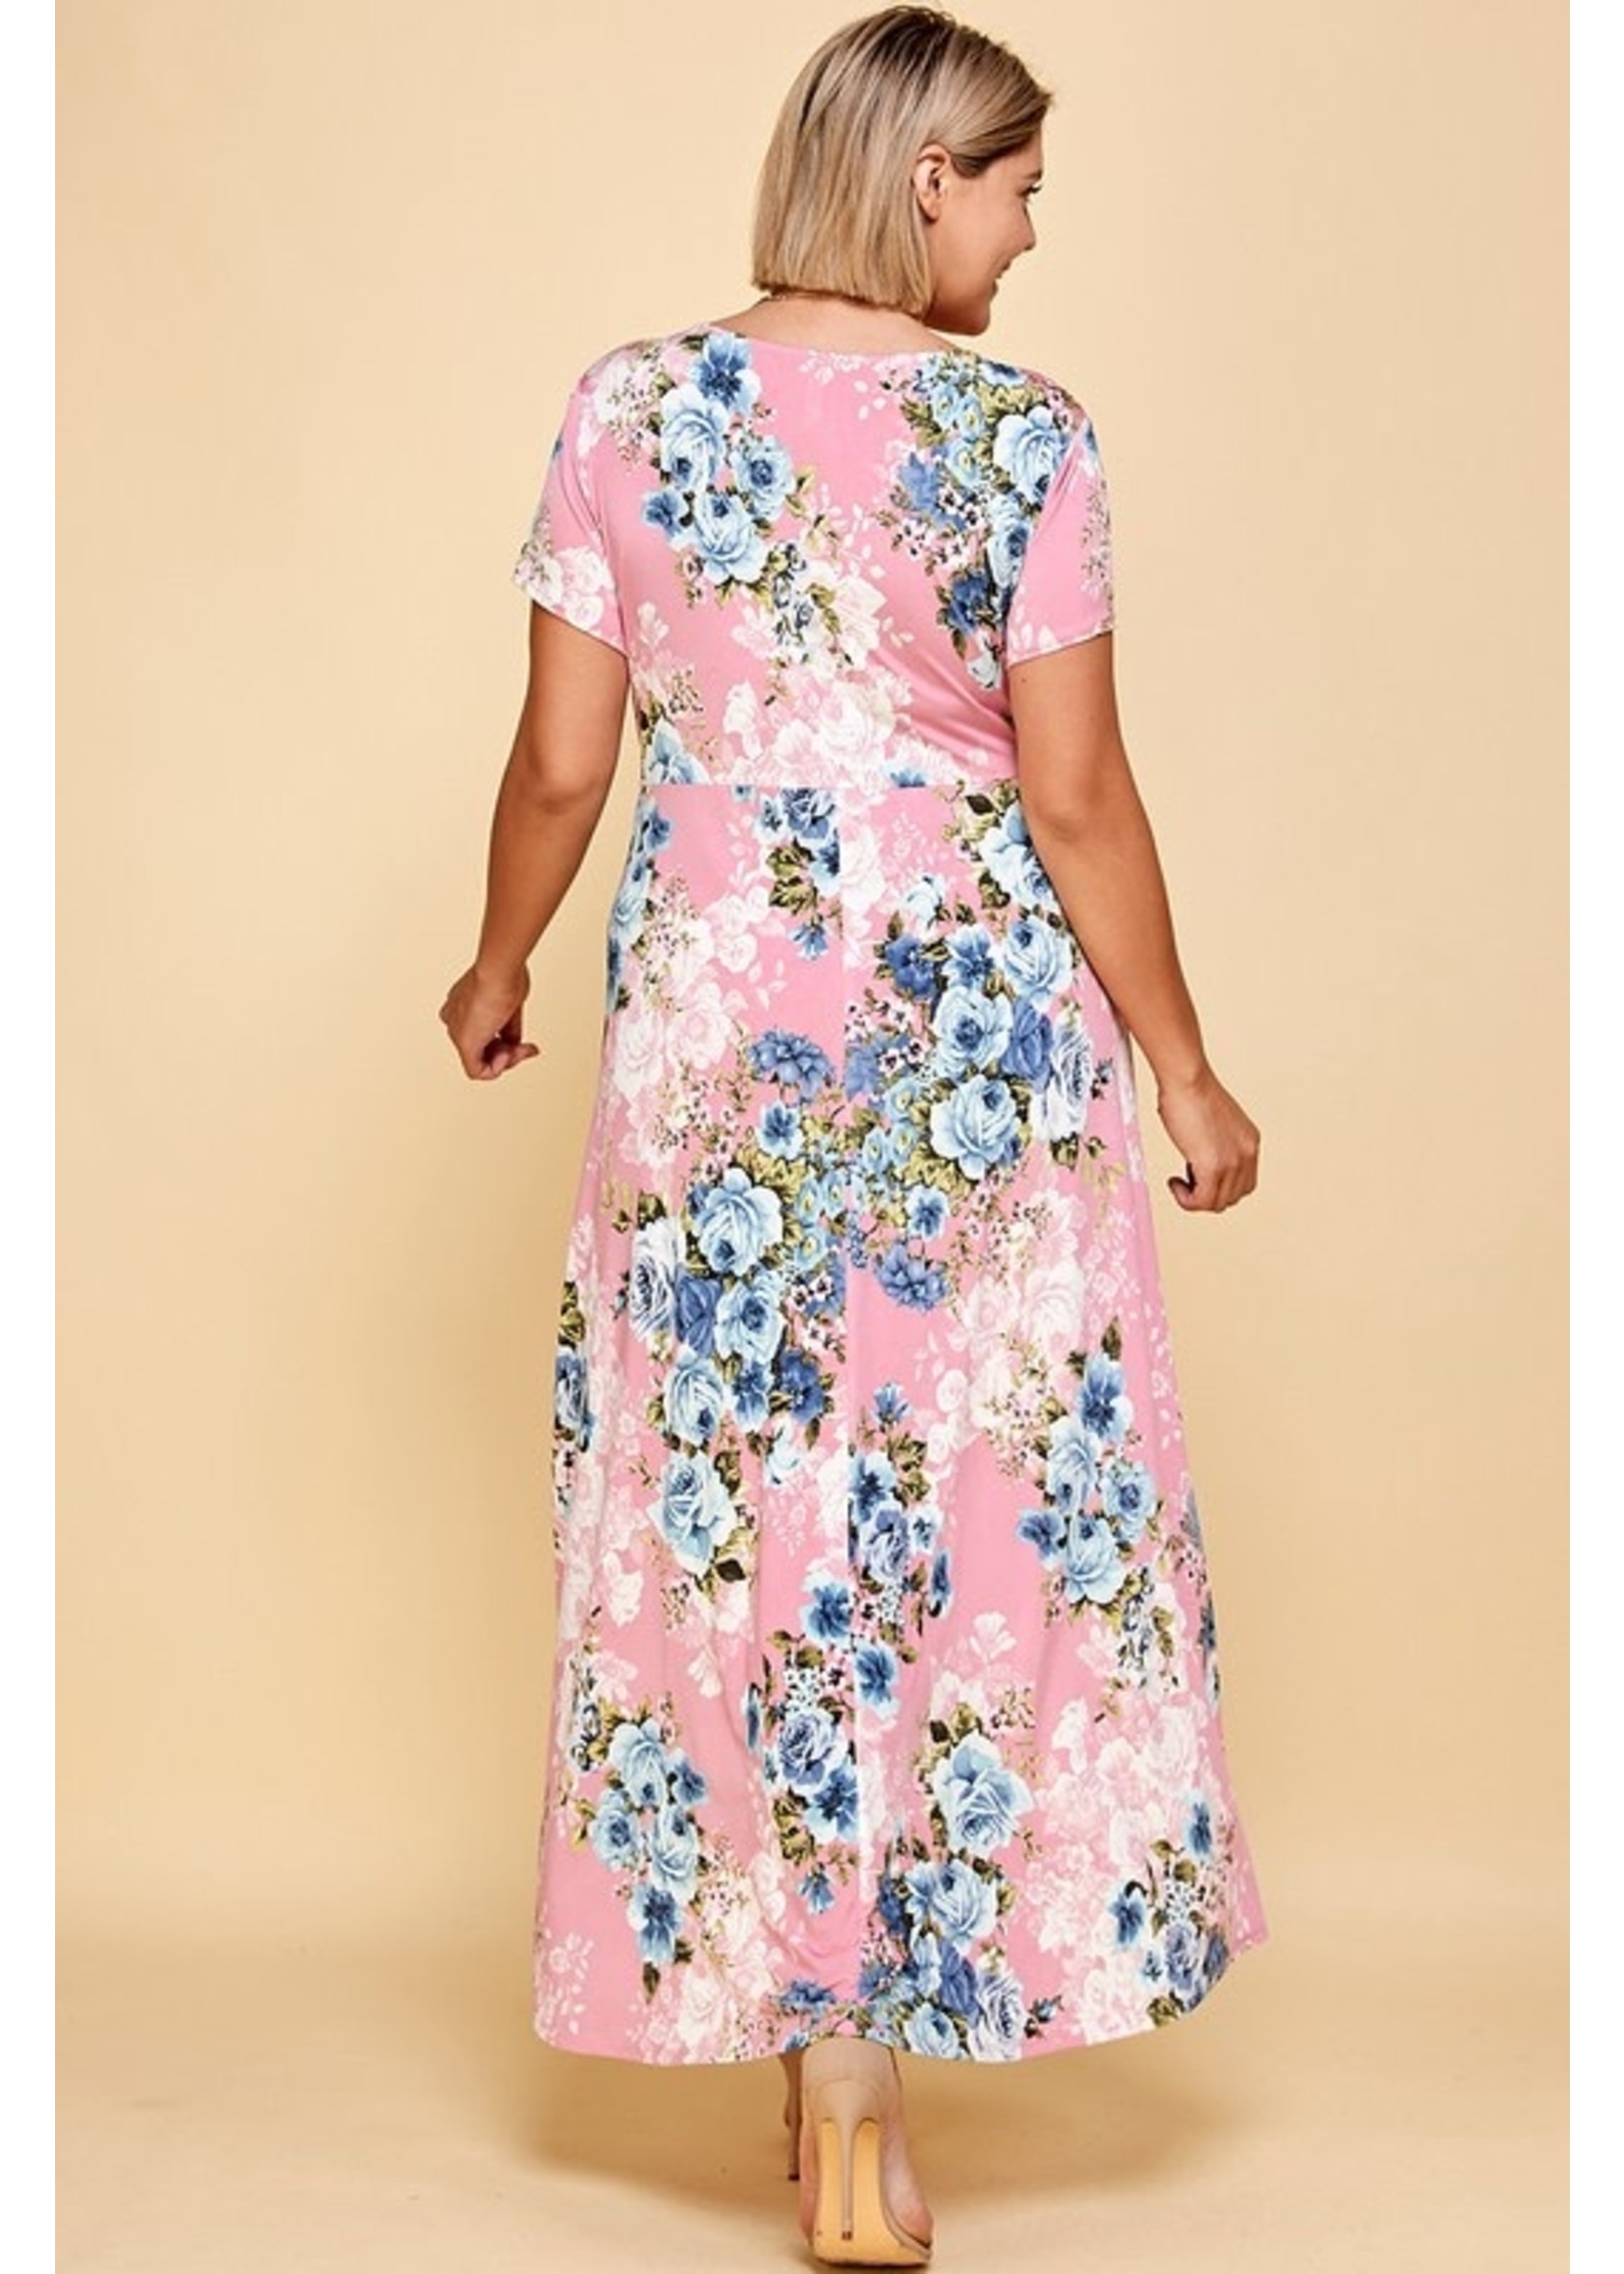 Floral Print Dress w/ High Low Hem